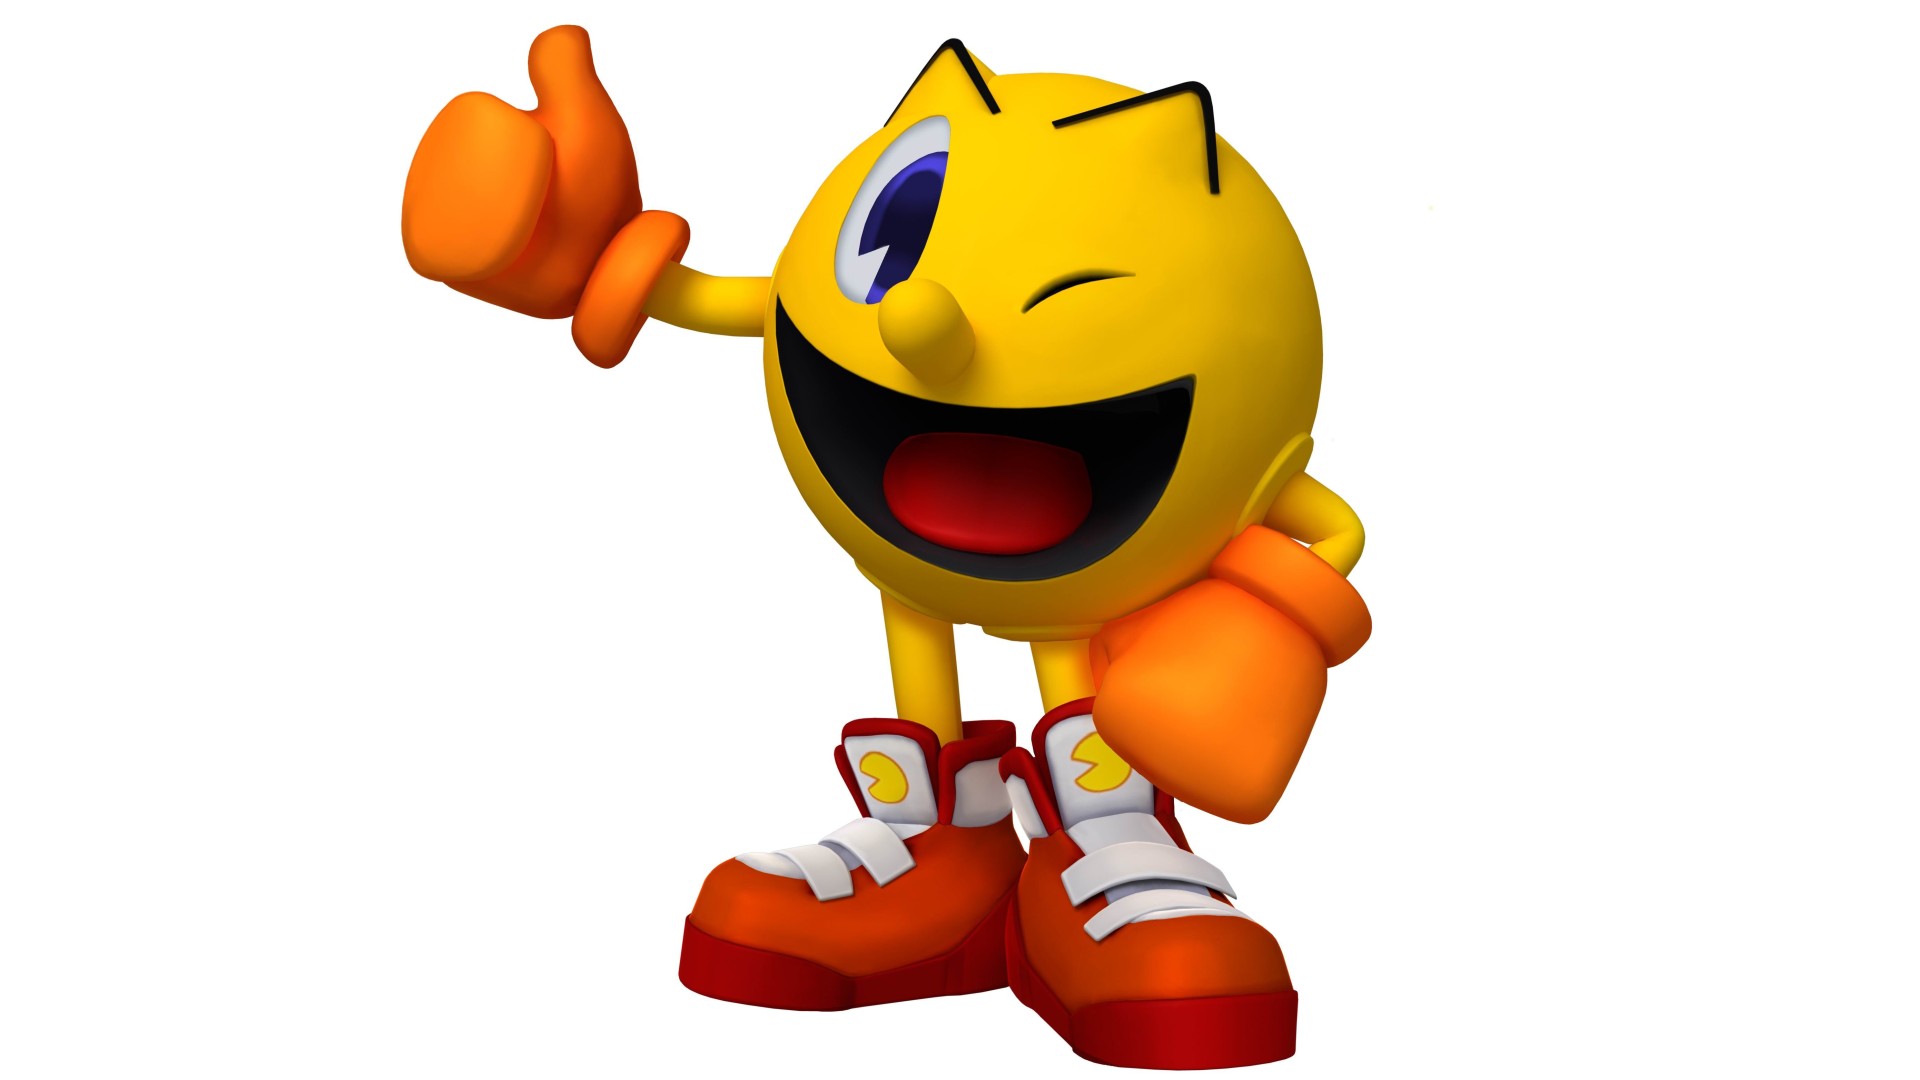 Descargar fondos de escritorio de Pac Man 2: The New Adventures HD